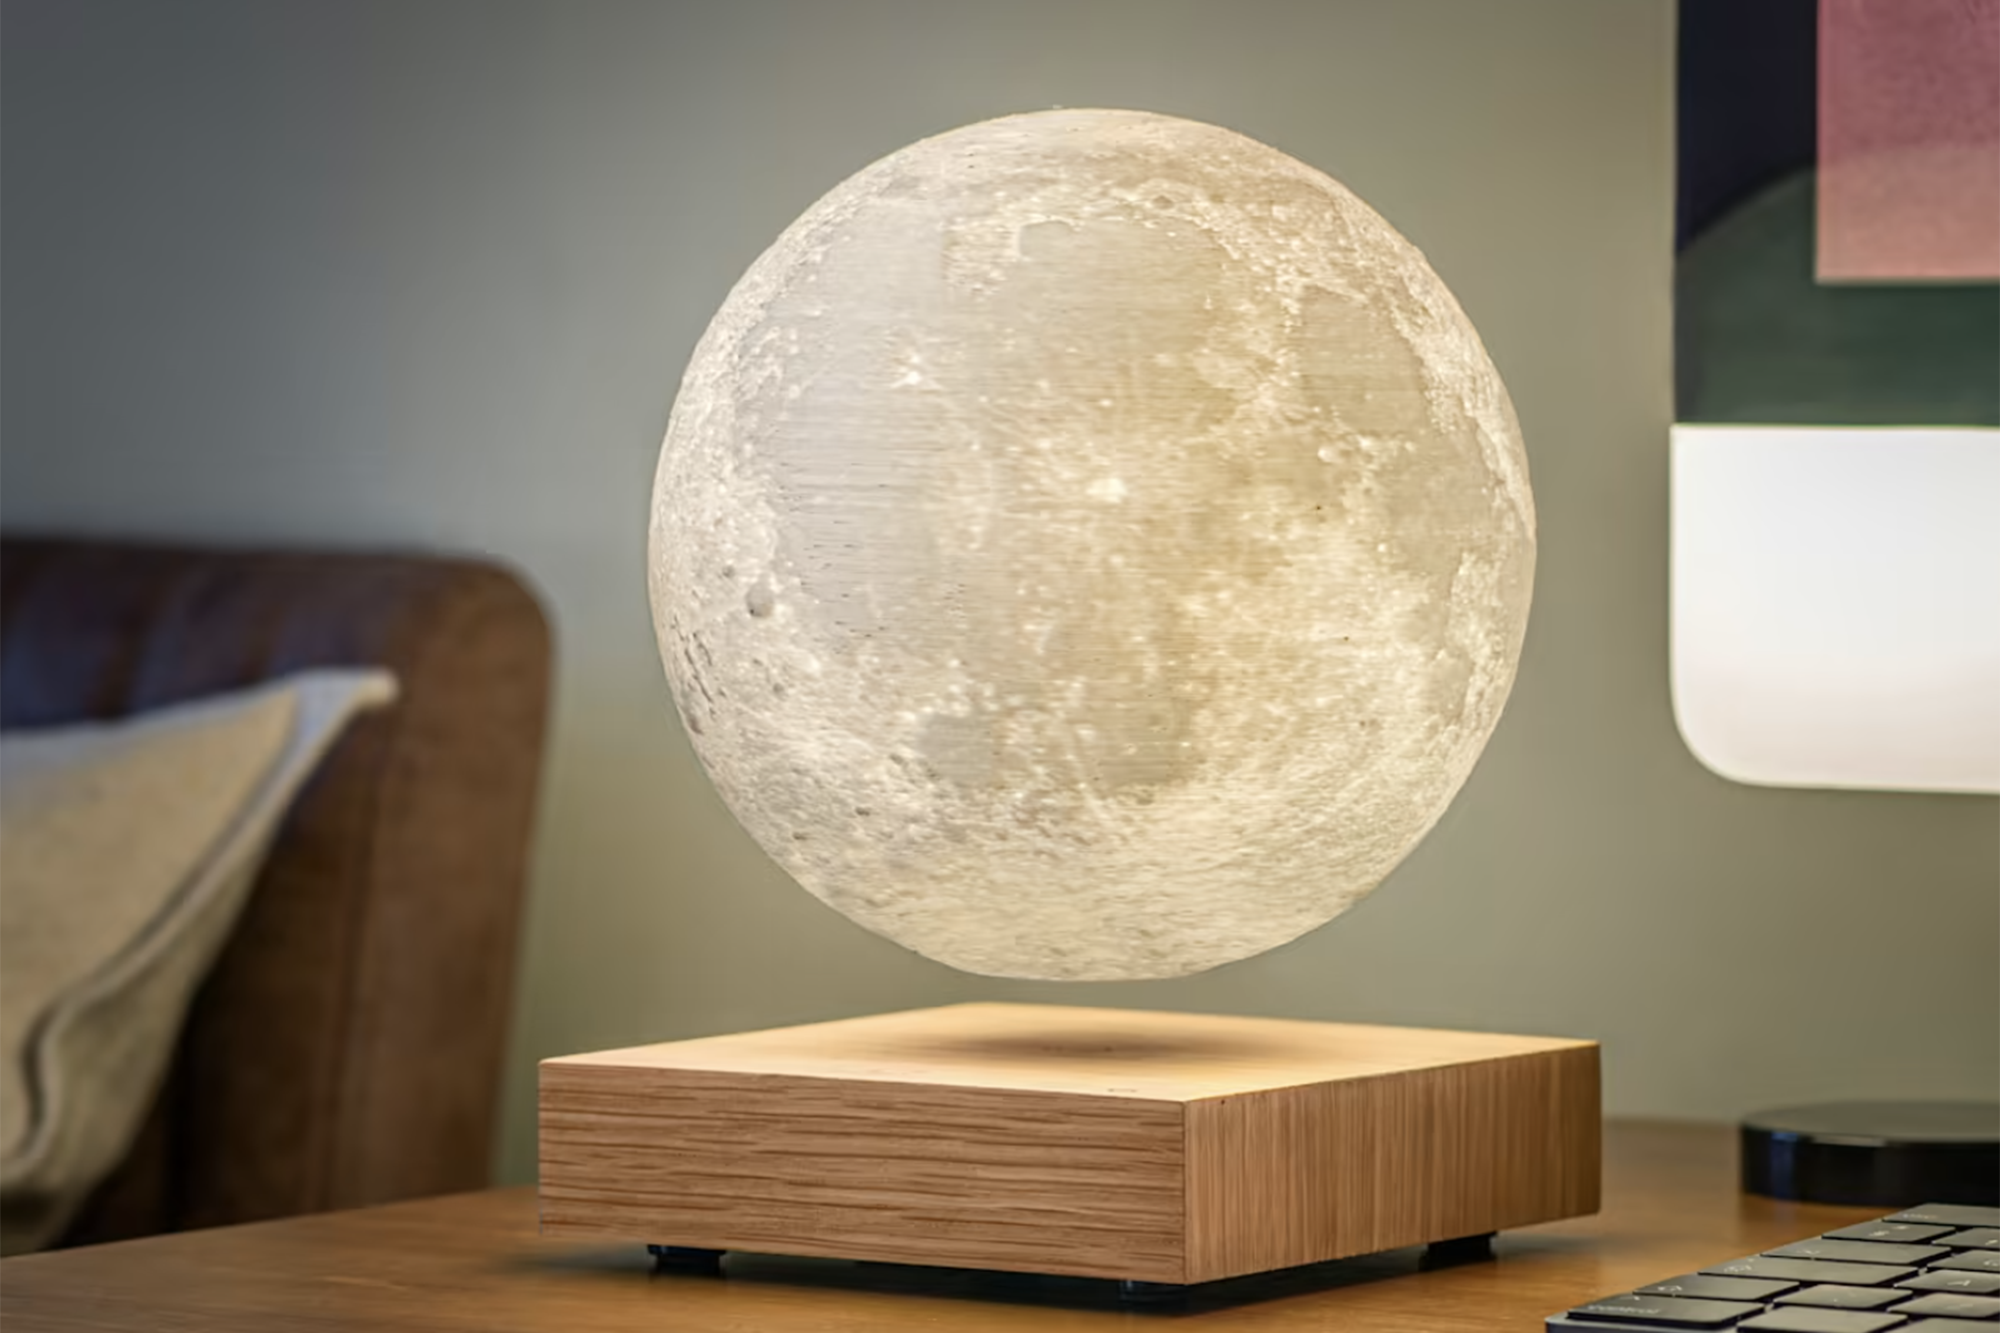 Bespoke Post Smart Moon Lamp